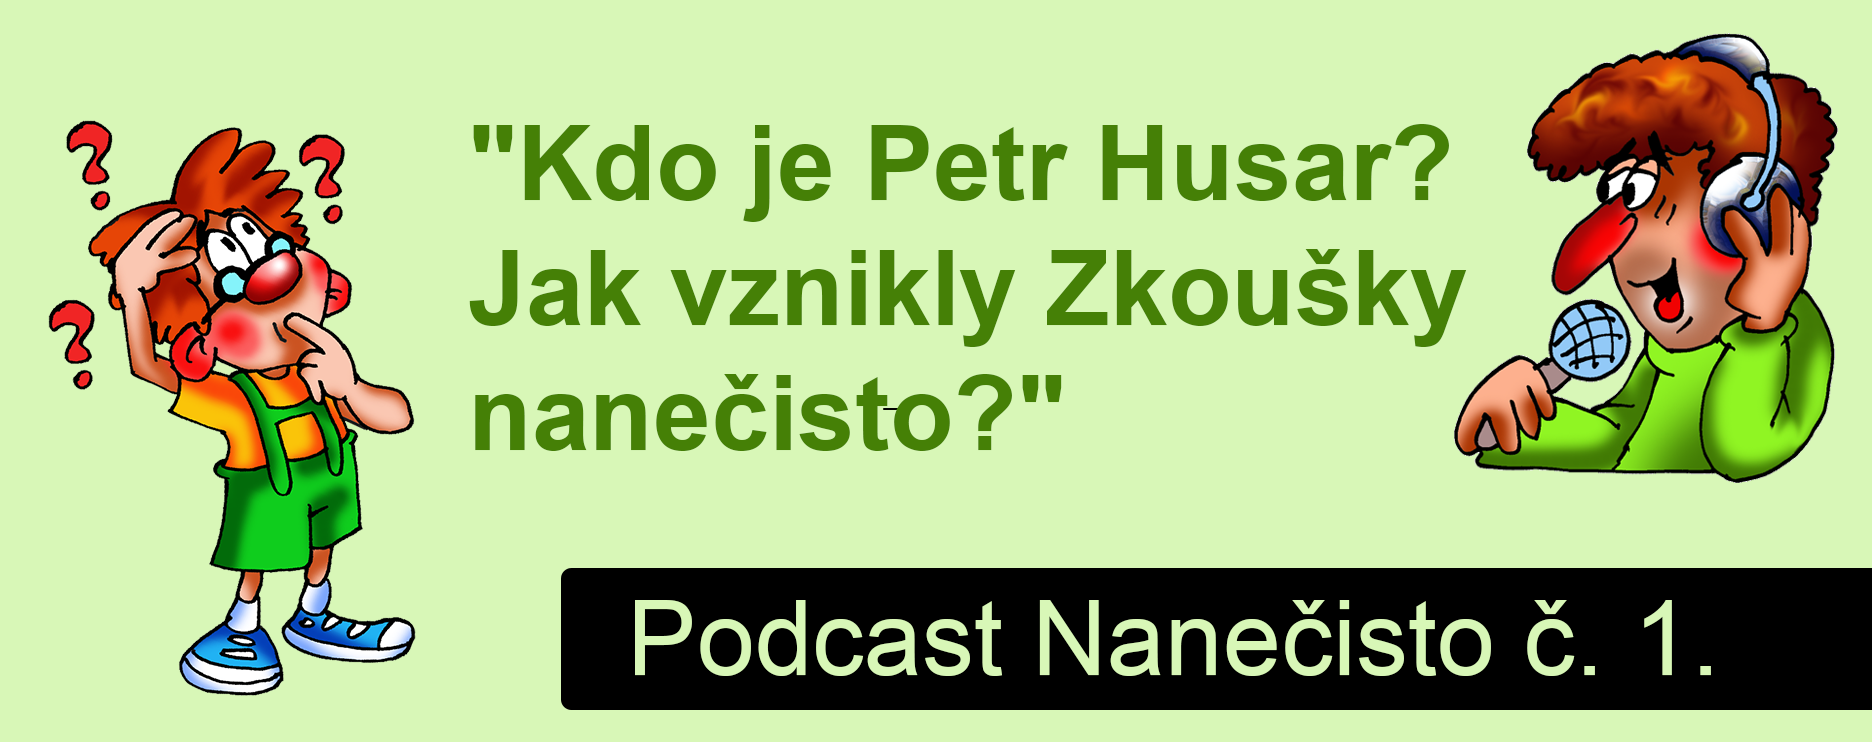 Podcast Nanečisto 1. epizoda